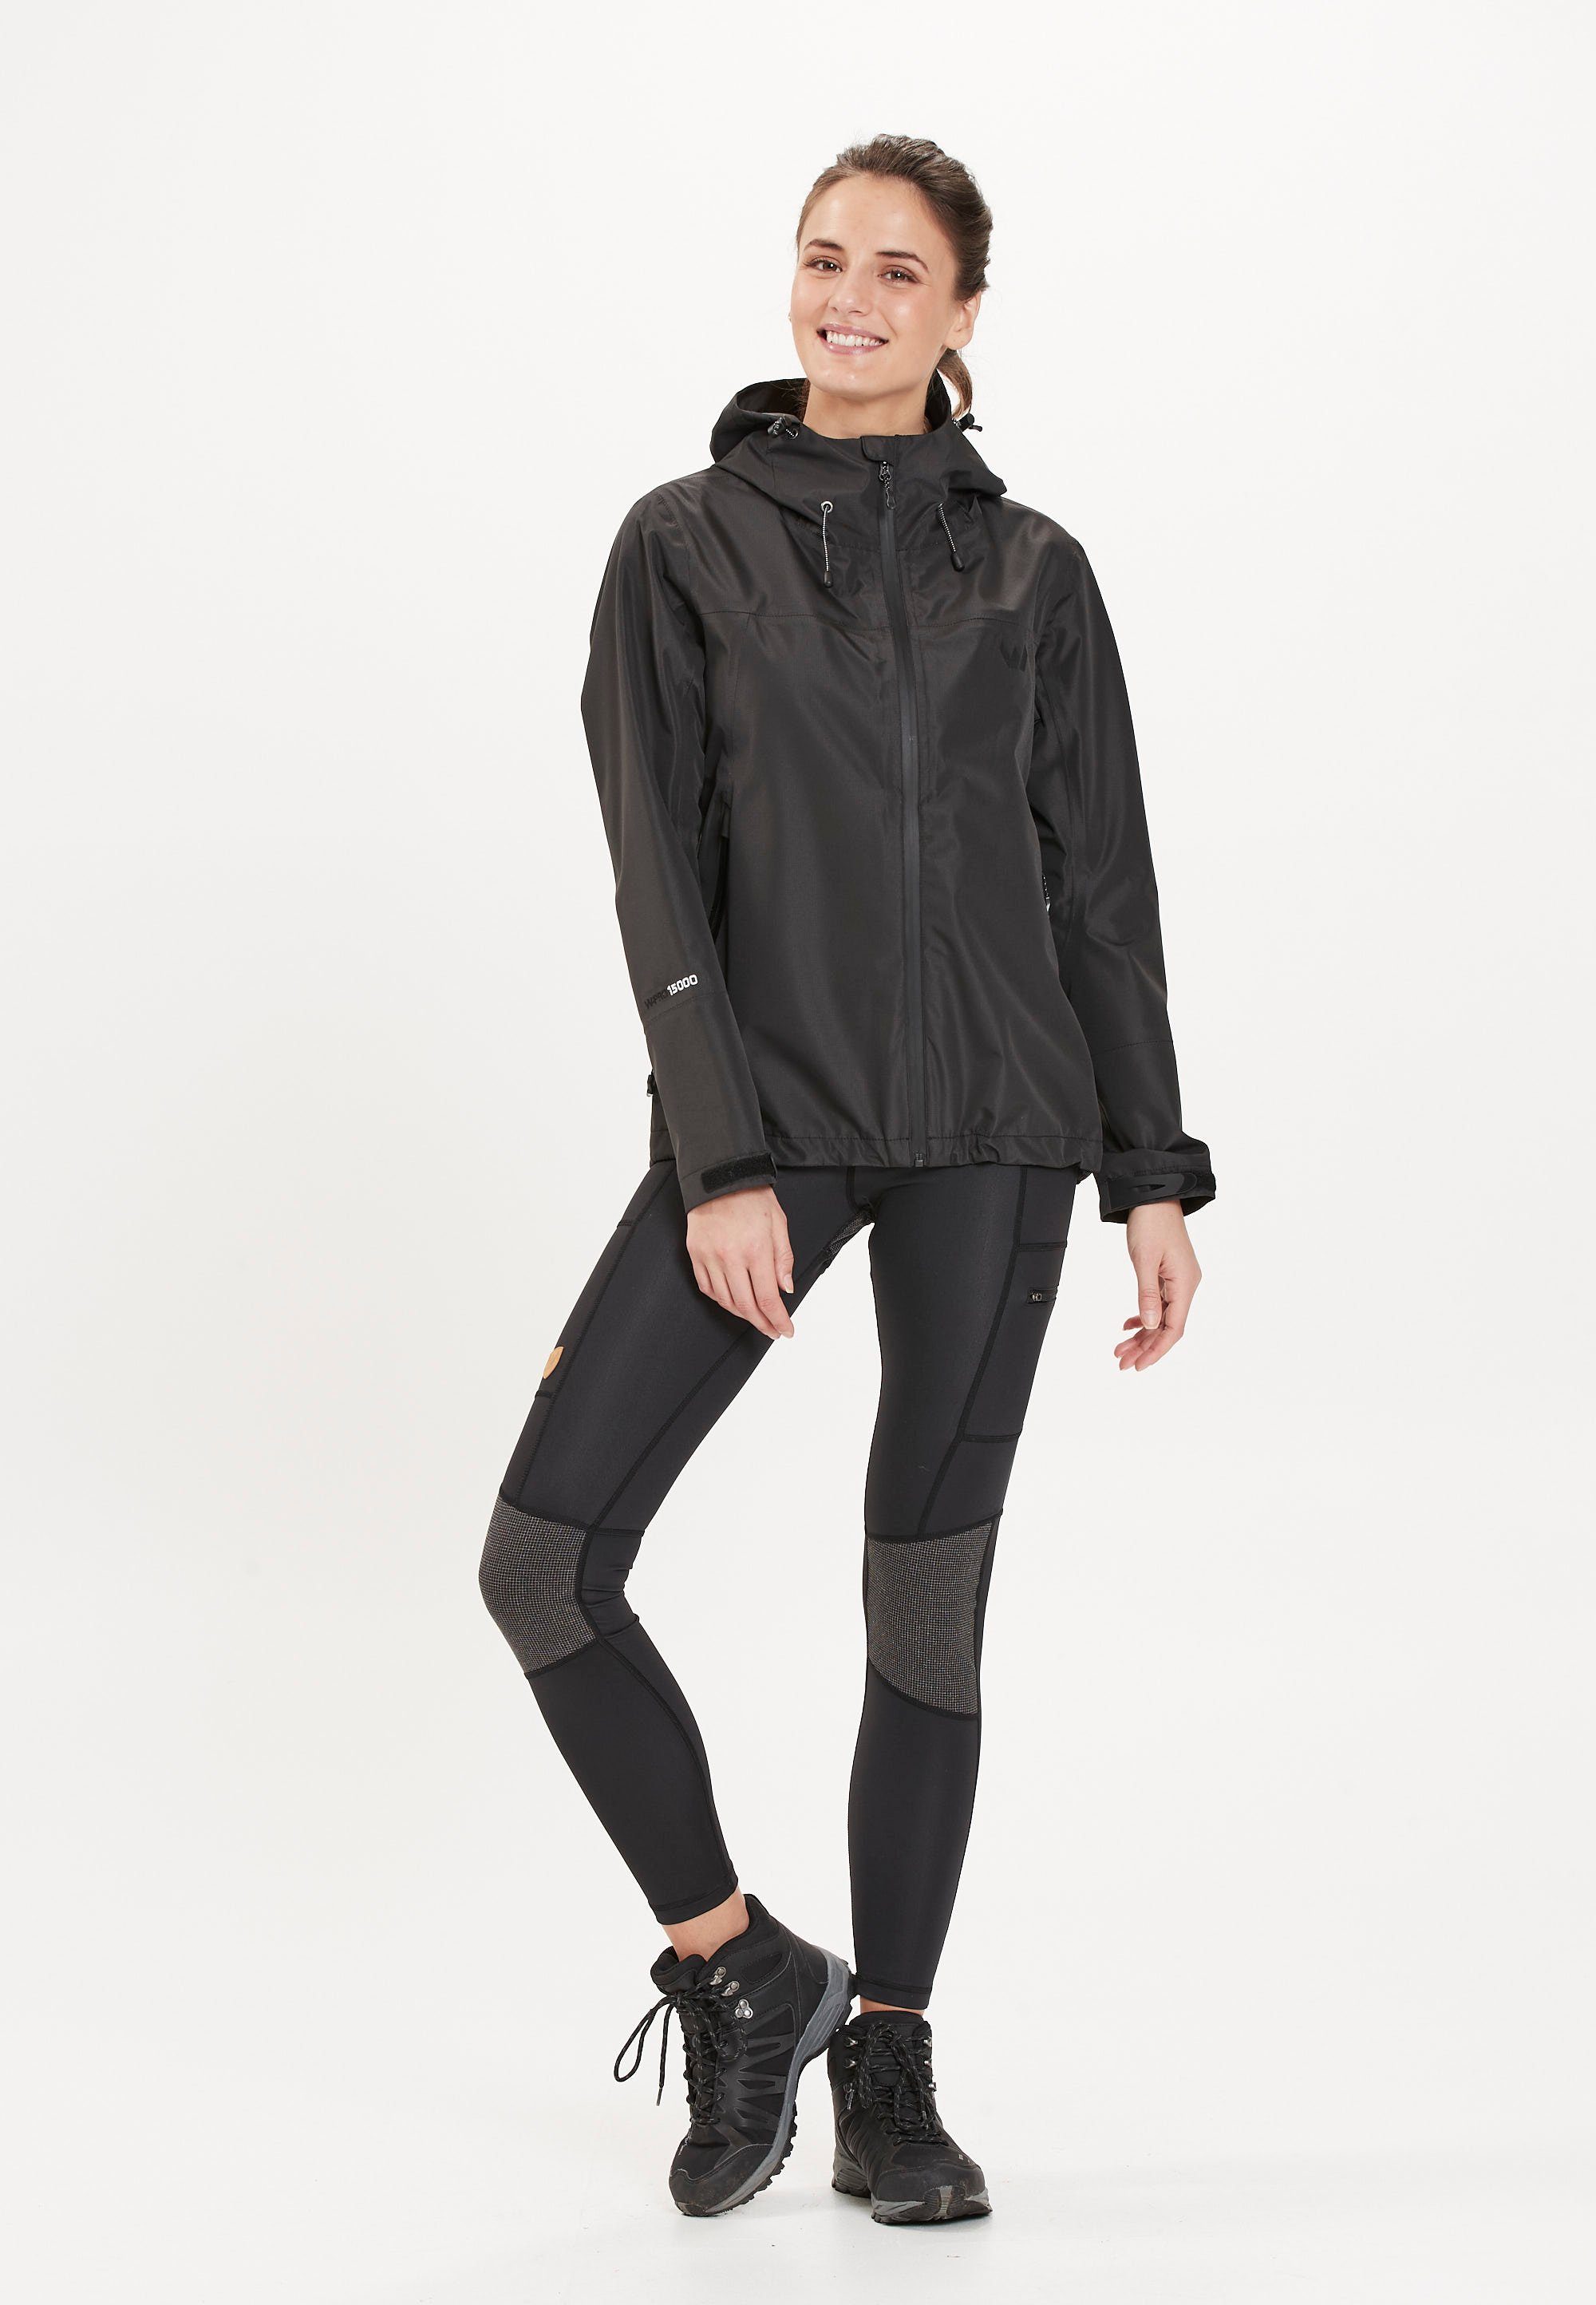 WHISTLER Softshelljacke BROOK W Shell mit W-PRO Jacket Kapuze schwarz praktischer 15000